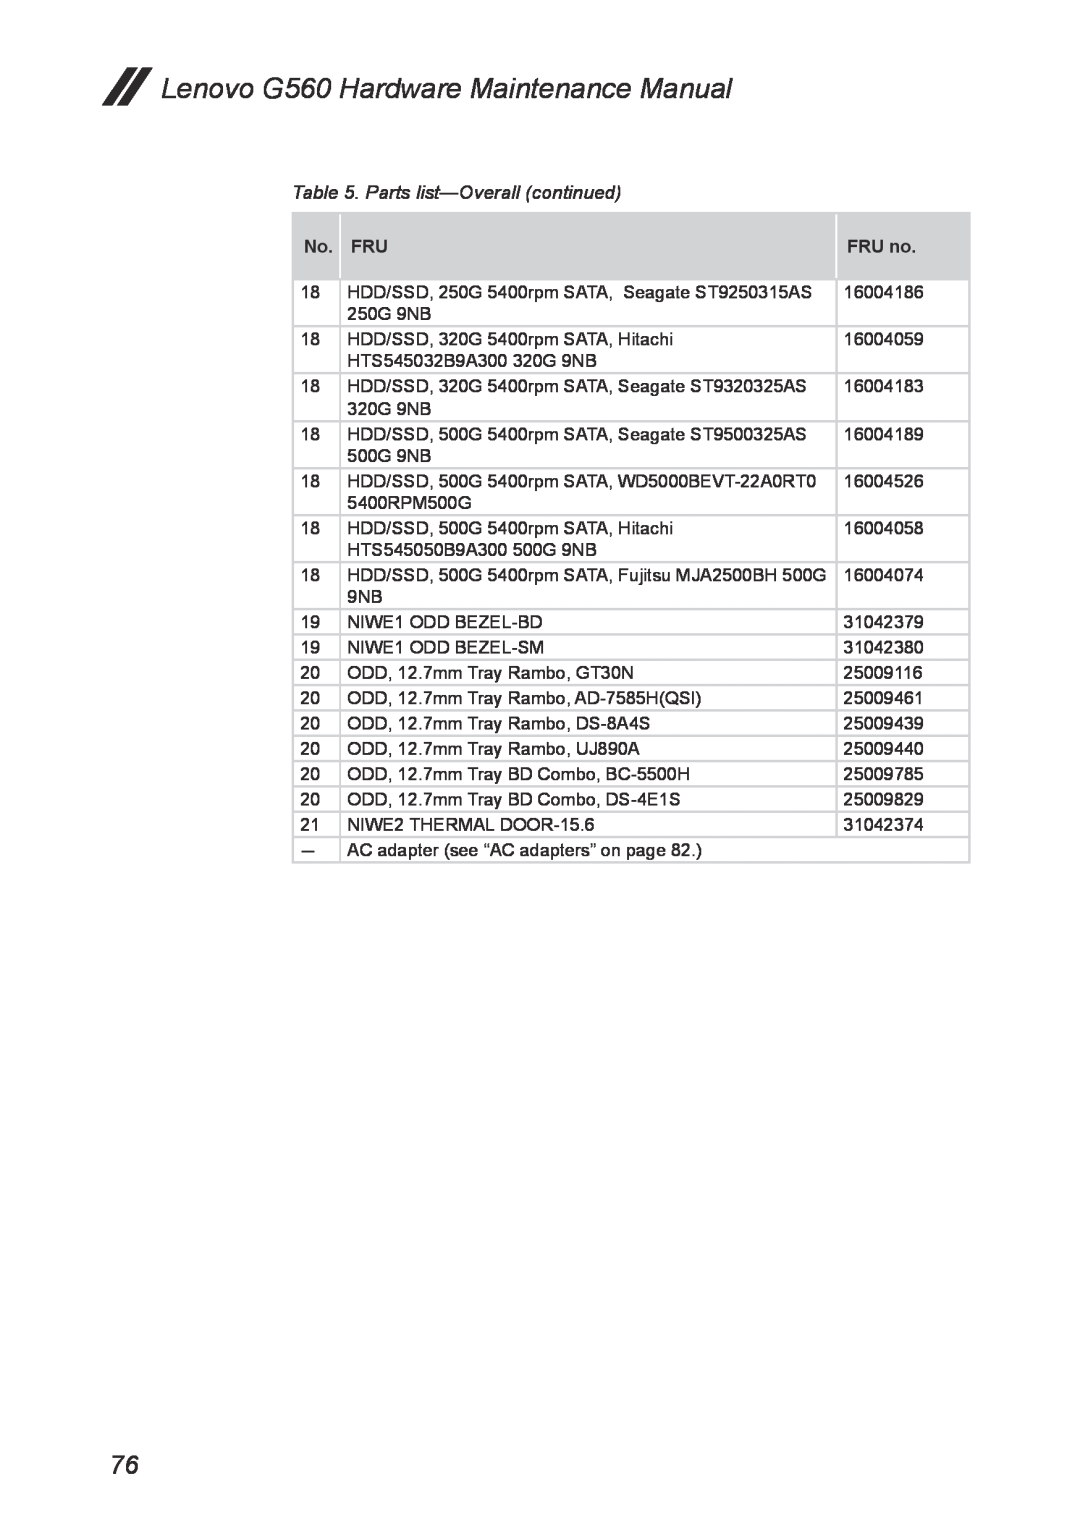 Lenovo manual Lenovo G560 Hardware Maintenance Manual, Parts list-Overall continued 